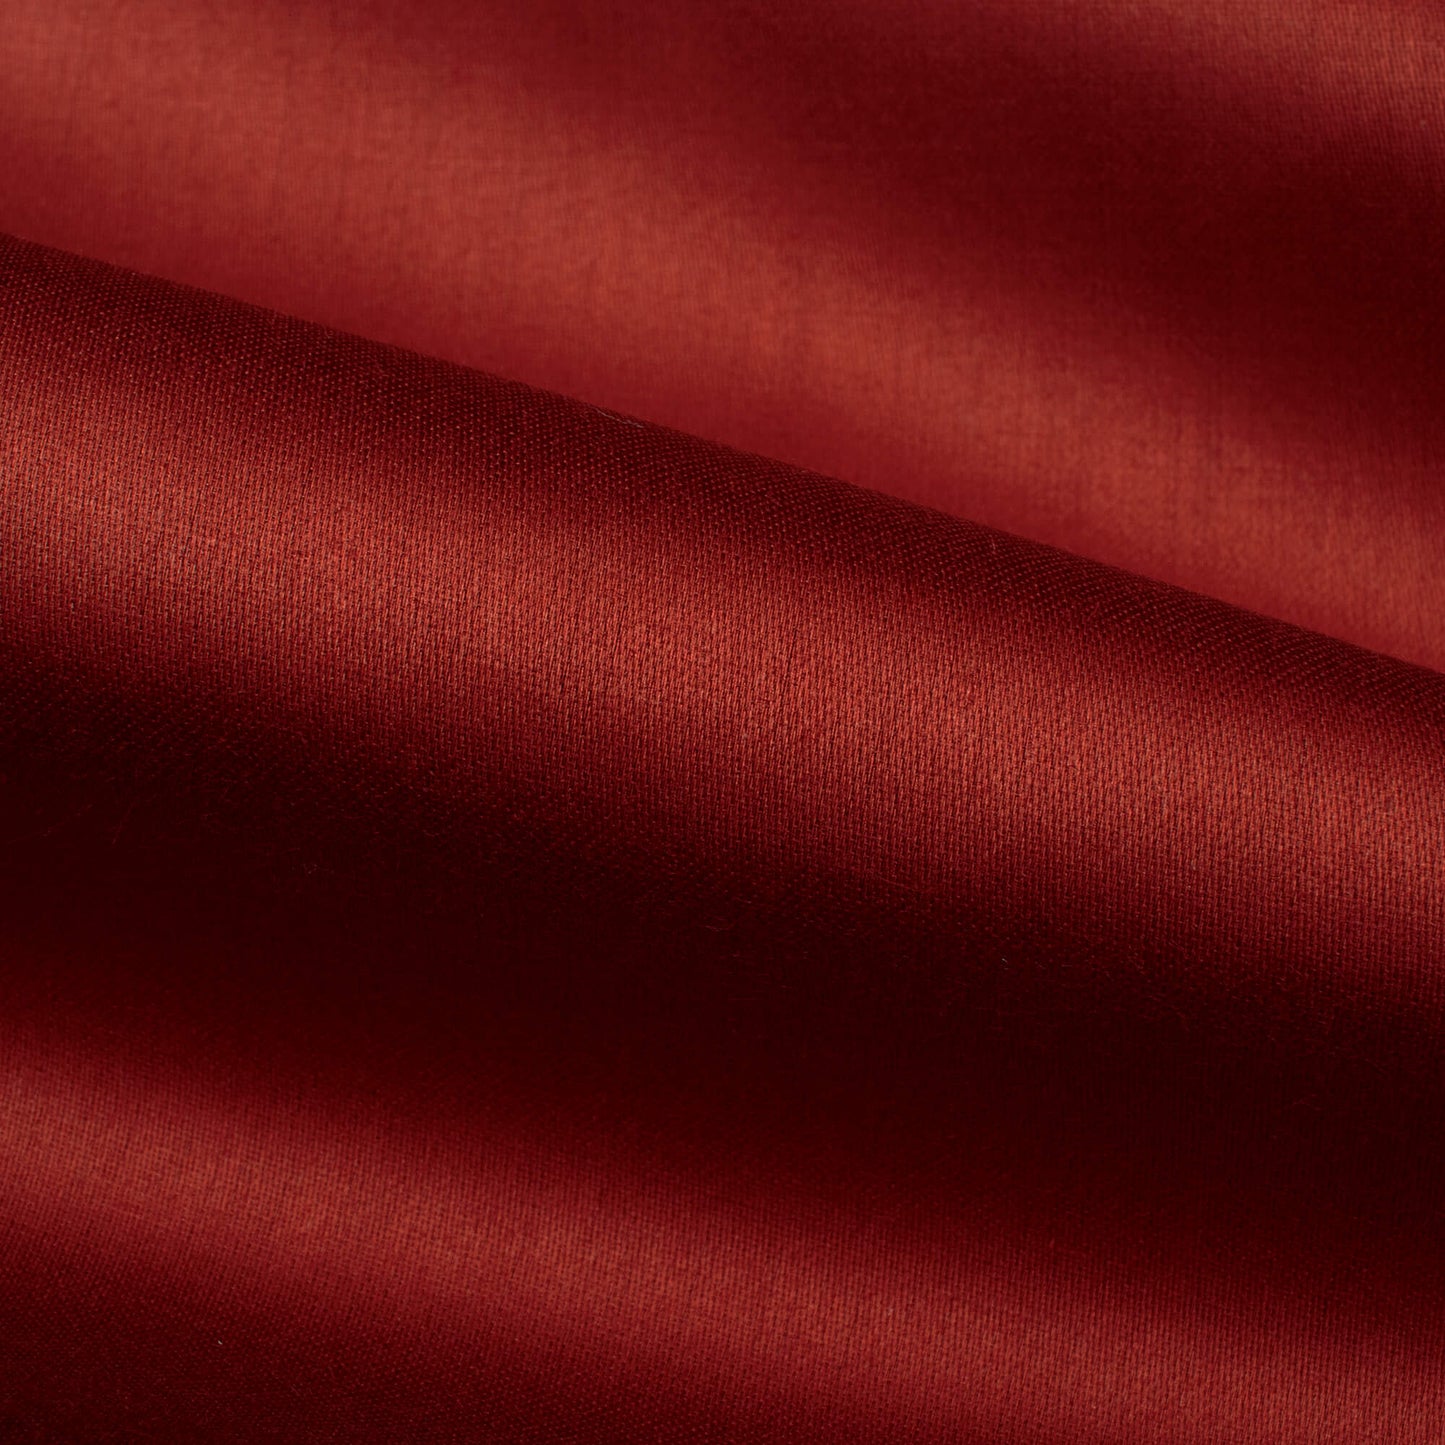 Burgundy Red Plain Glazed Cotton Fabric